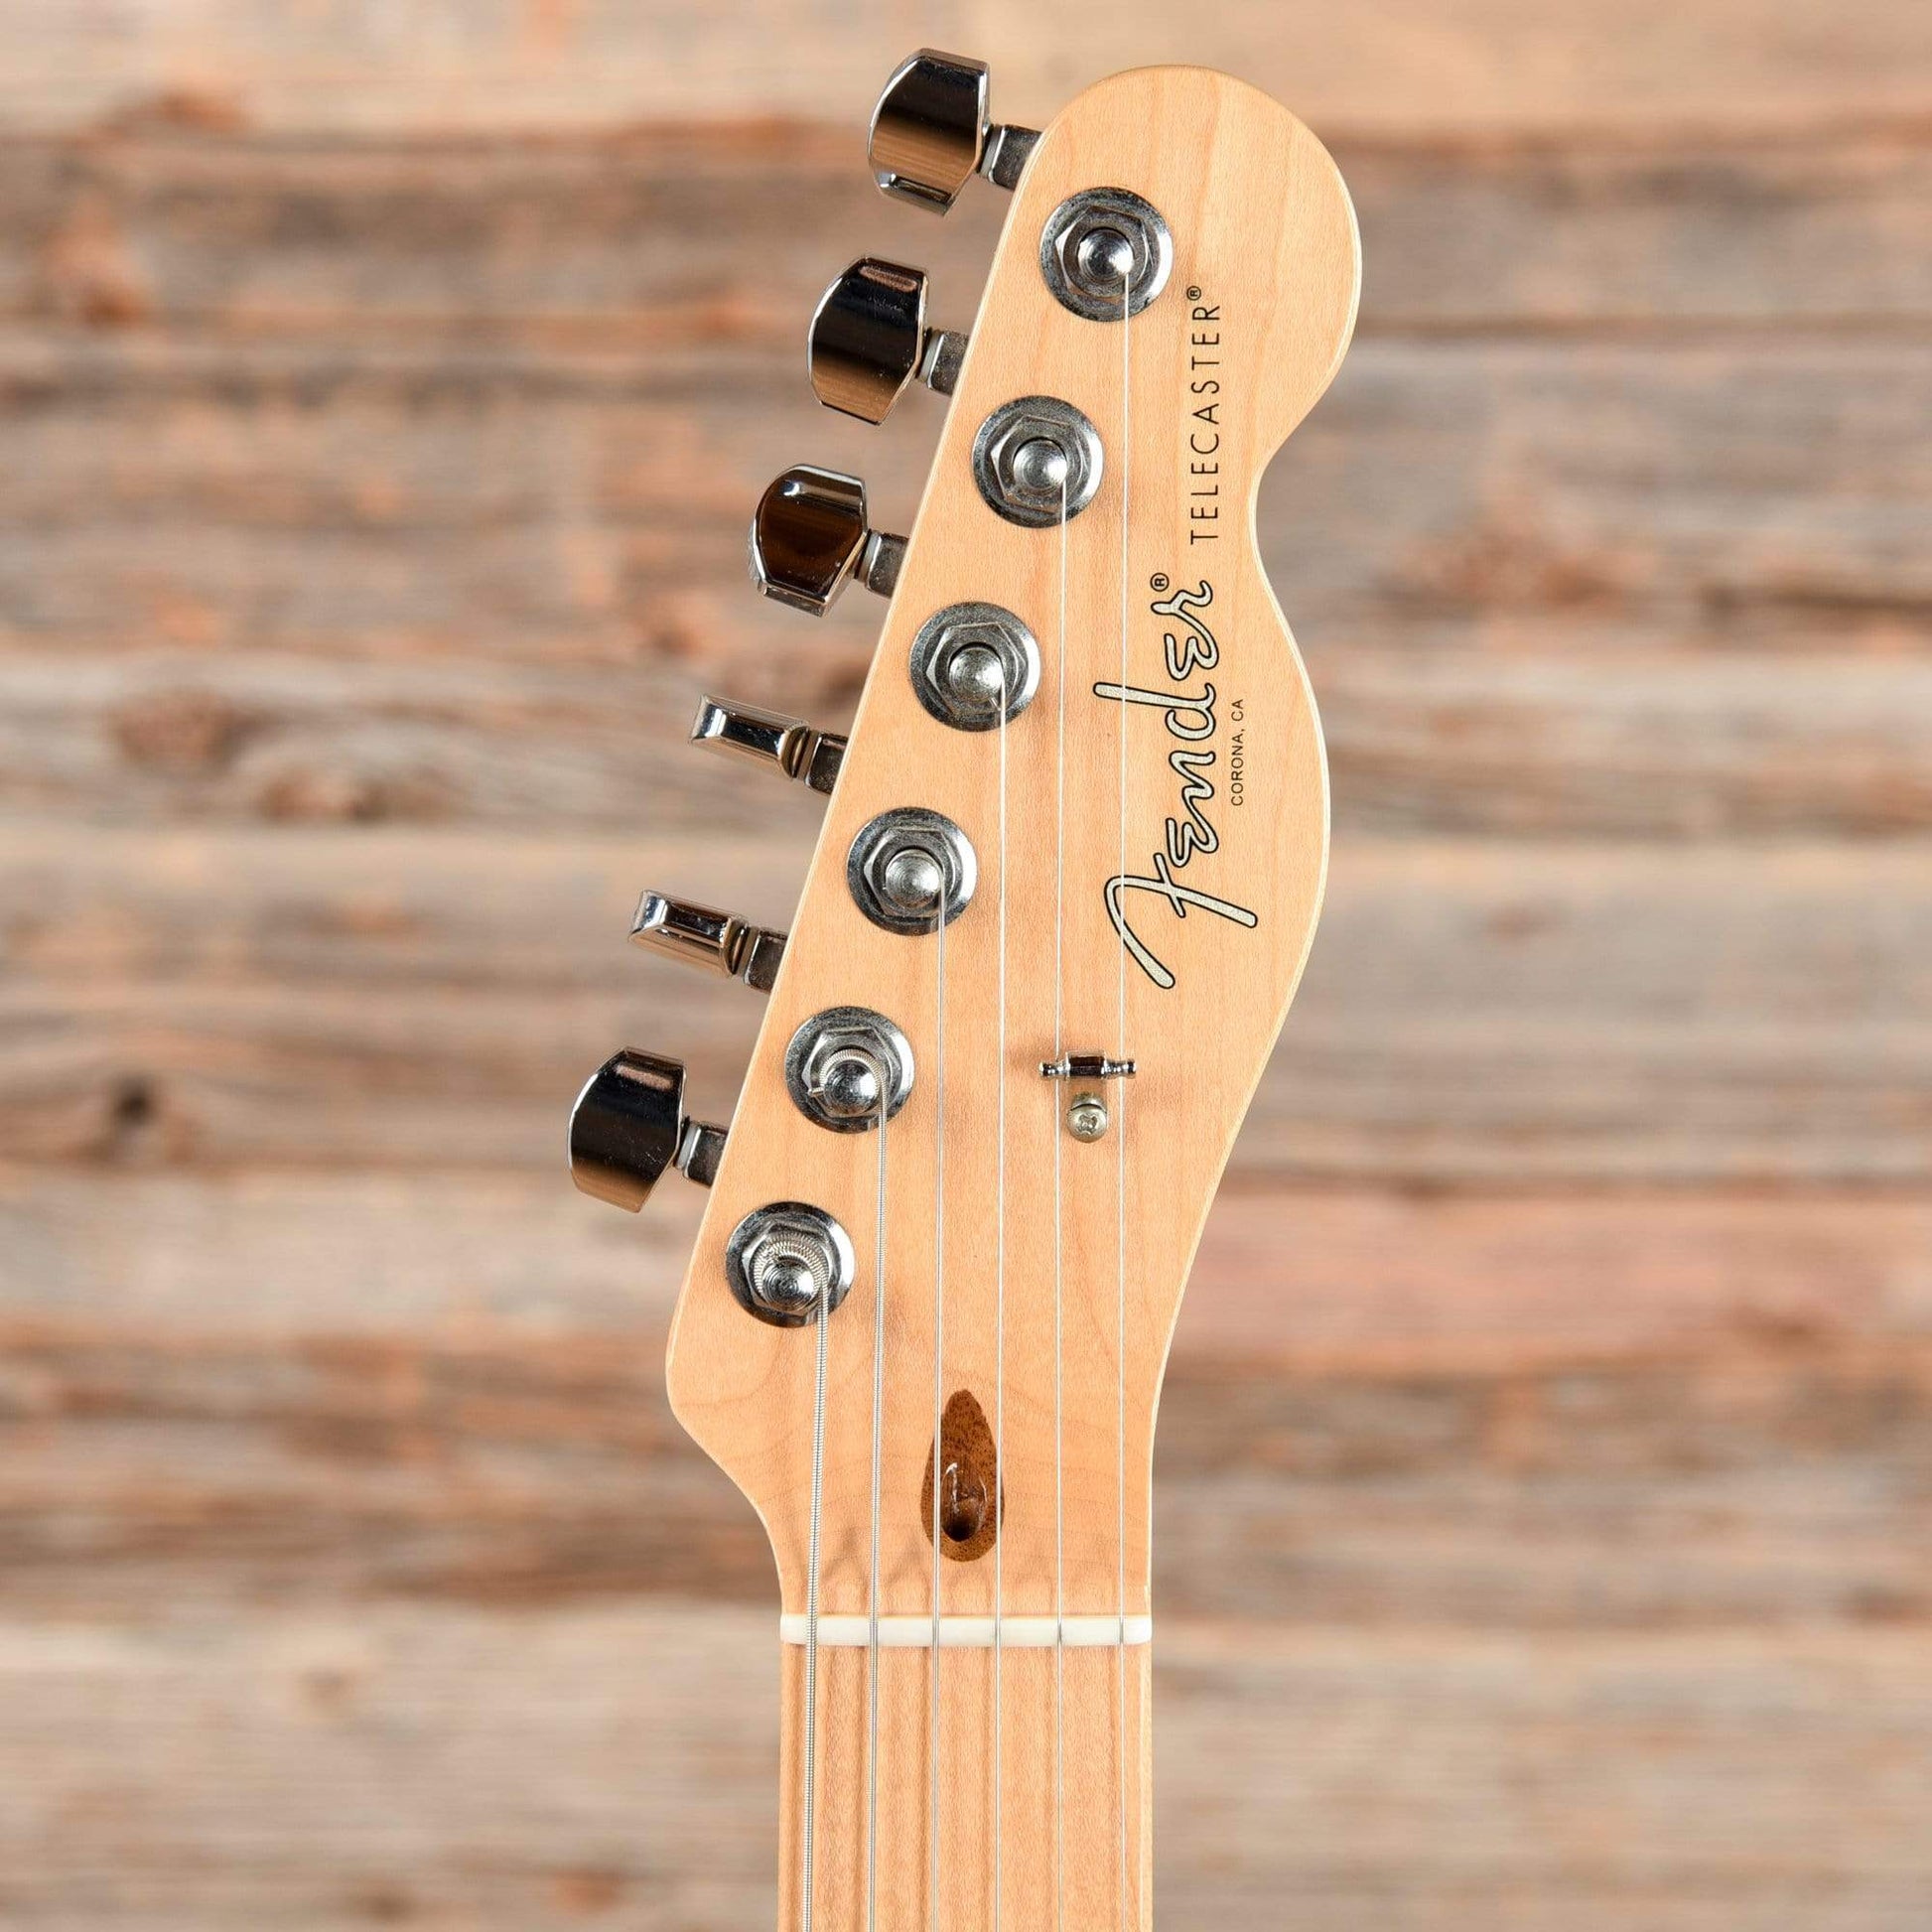 Fender American Pro Telecaster Deluxe ShawBucker Black 2016 Electric Guitars / Solid Body